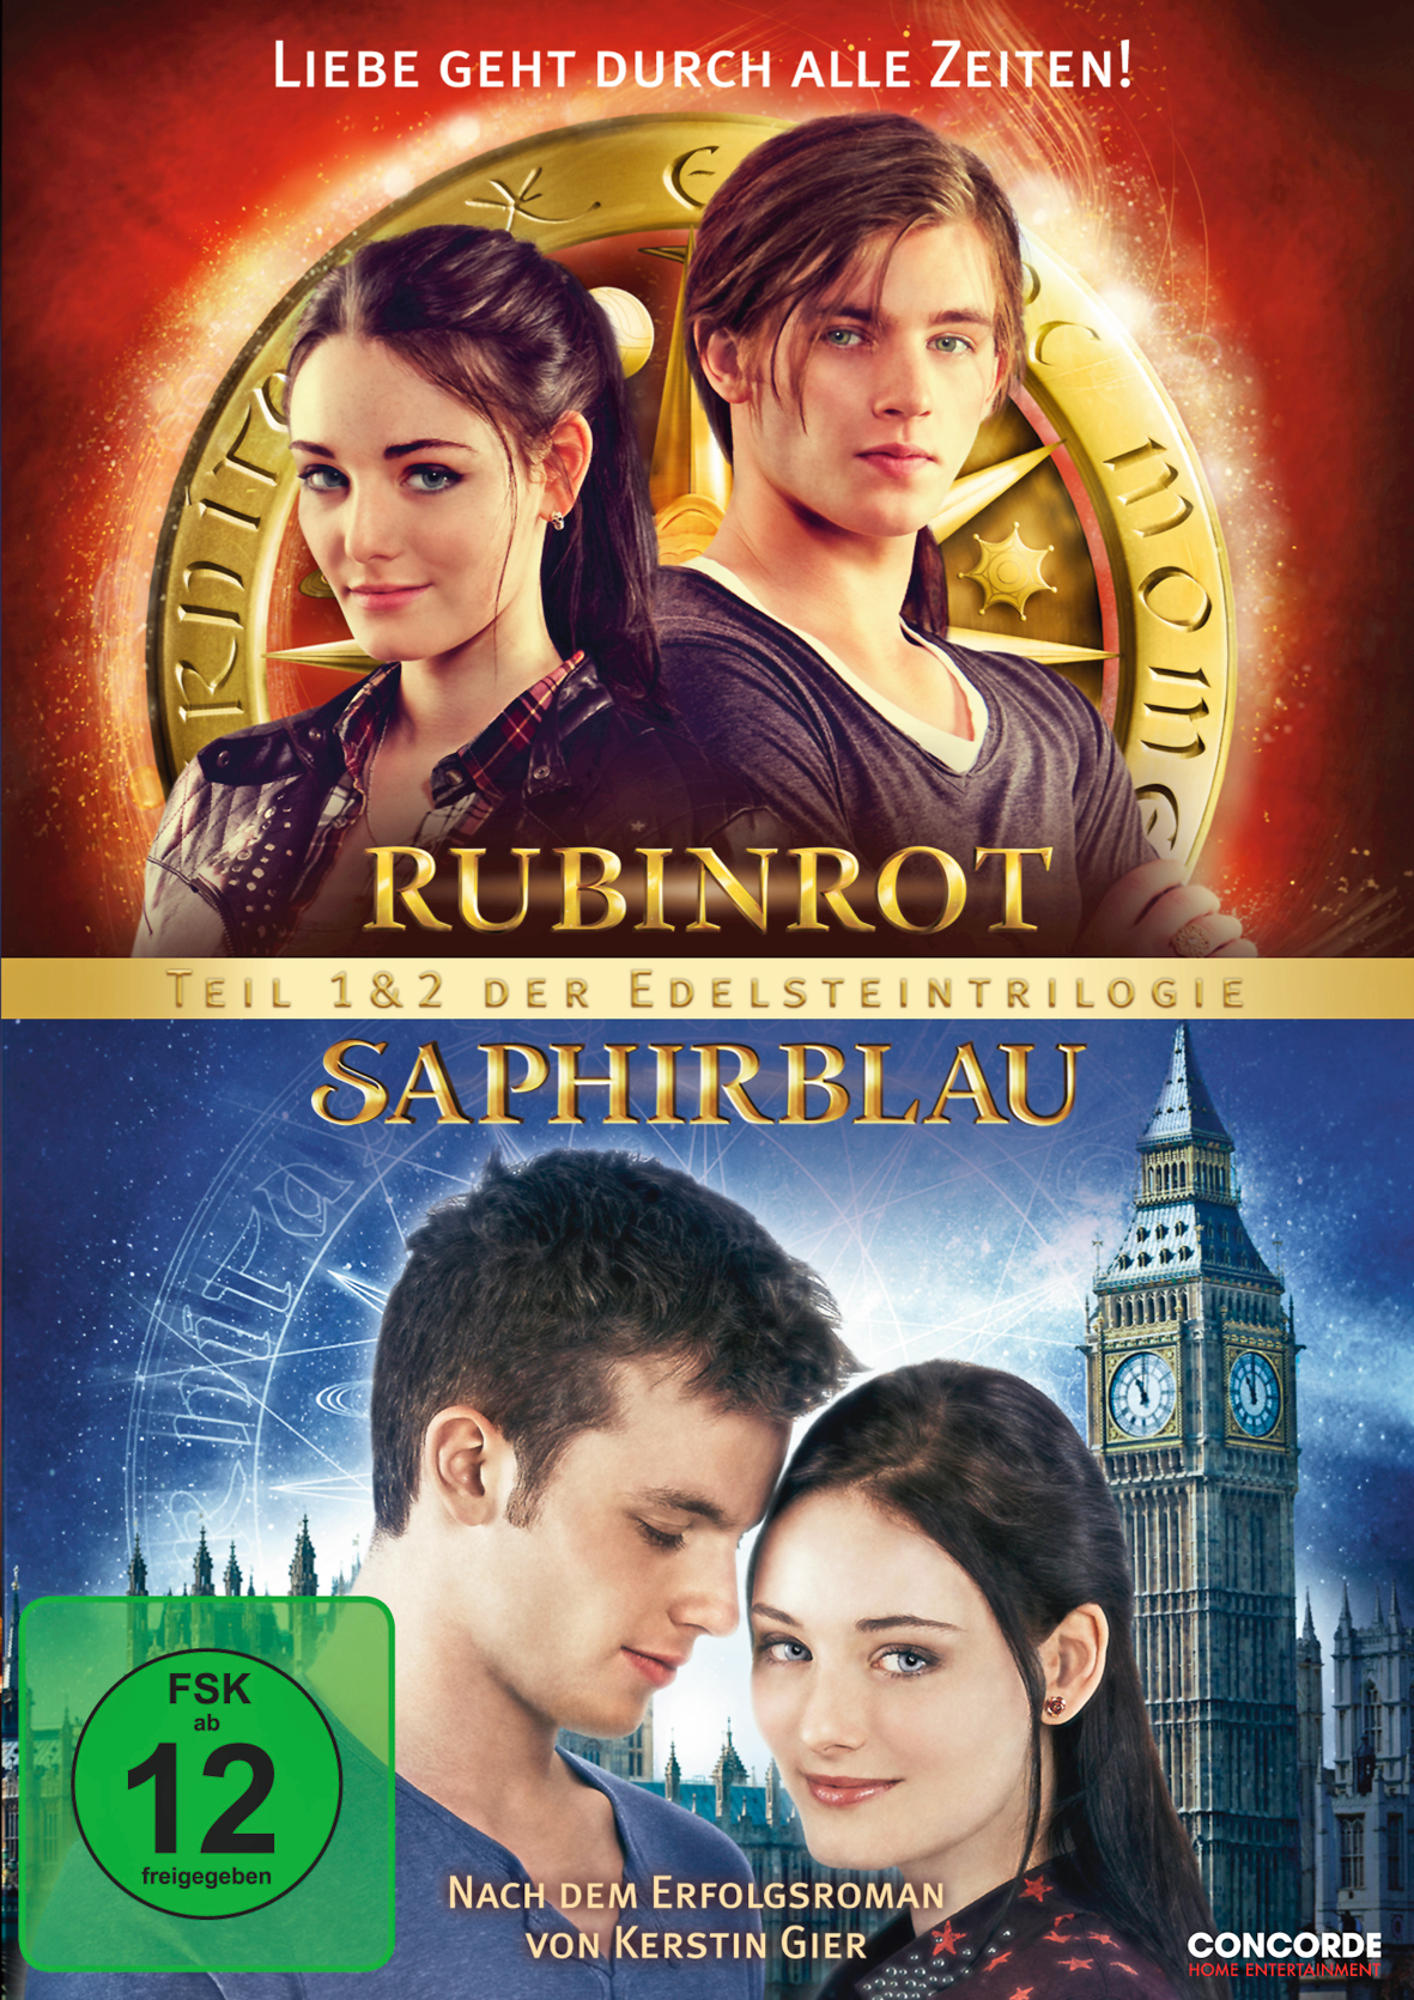 DVD Die Rubinrot/Saphirblau - Doppeledition